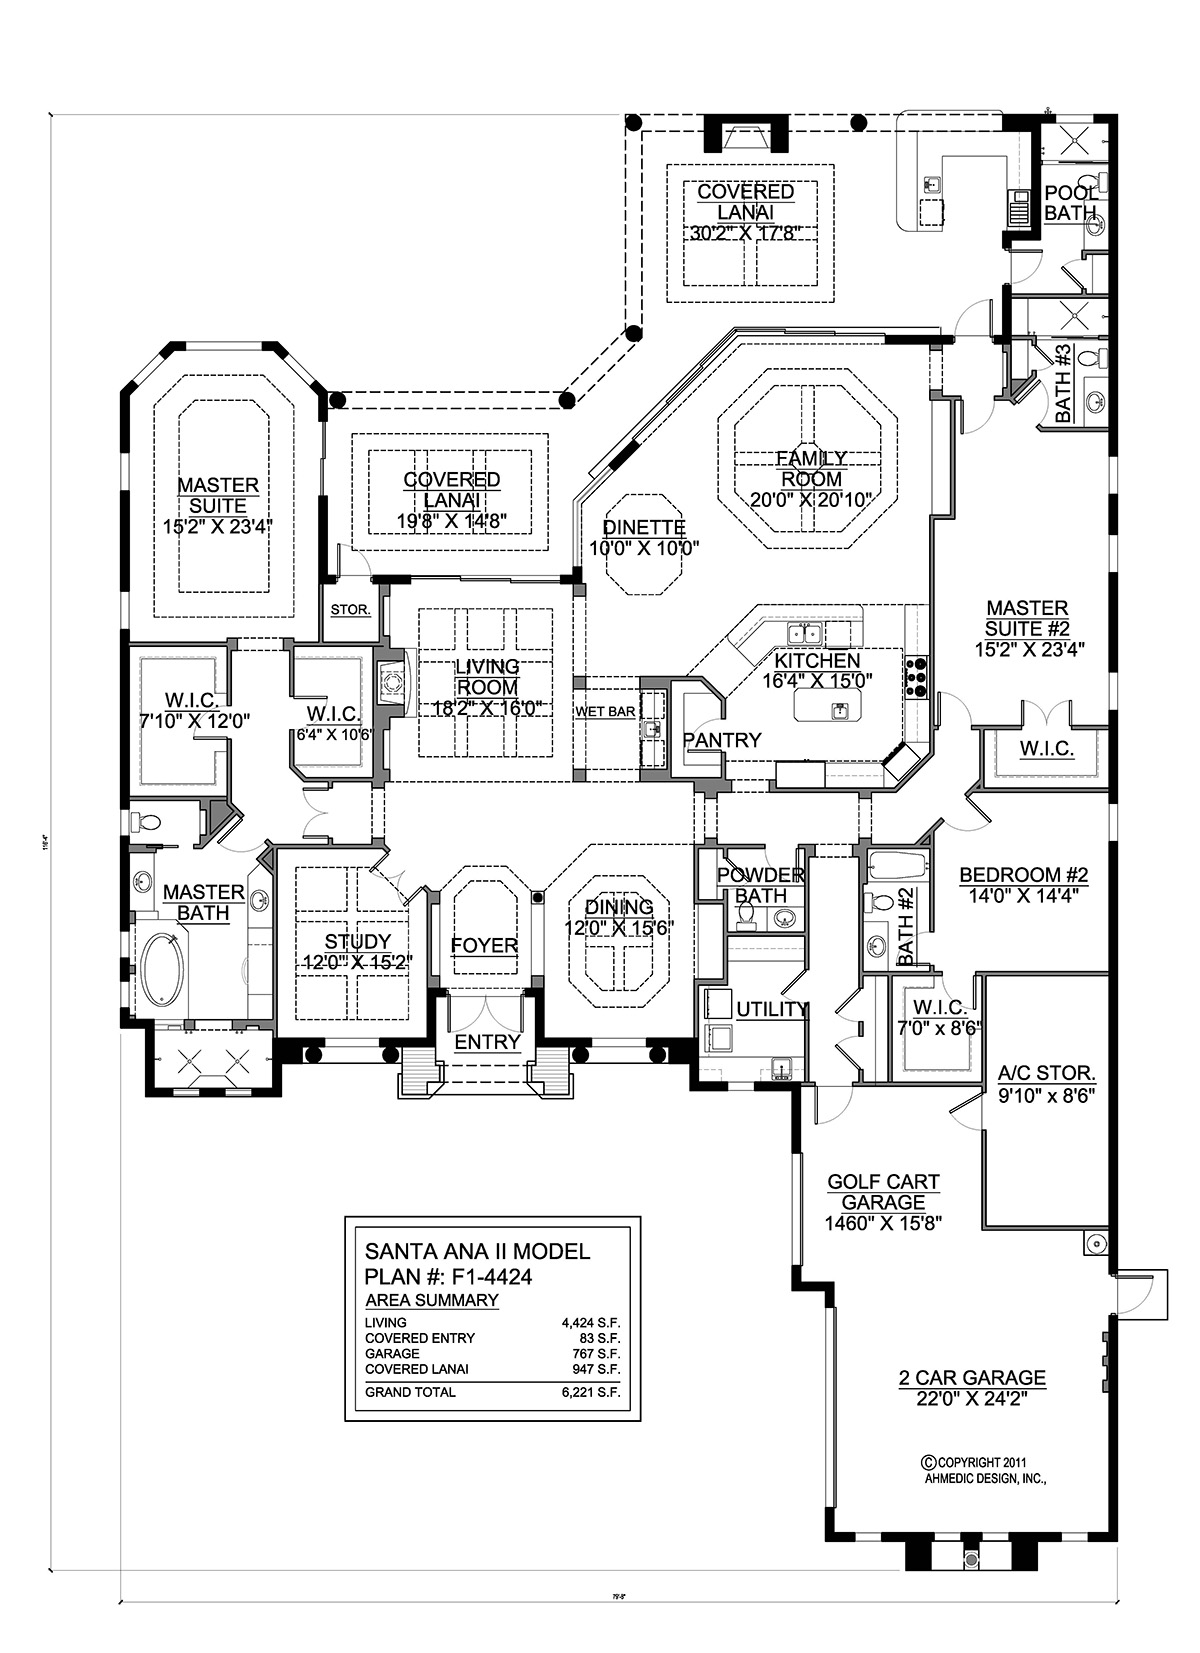 Santa-ana-2 Floor Plan